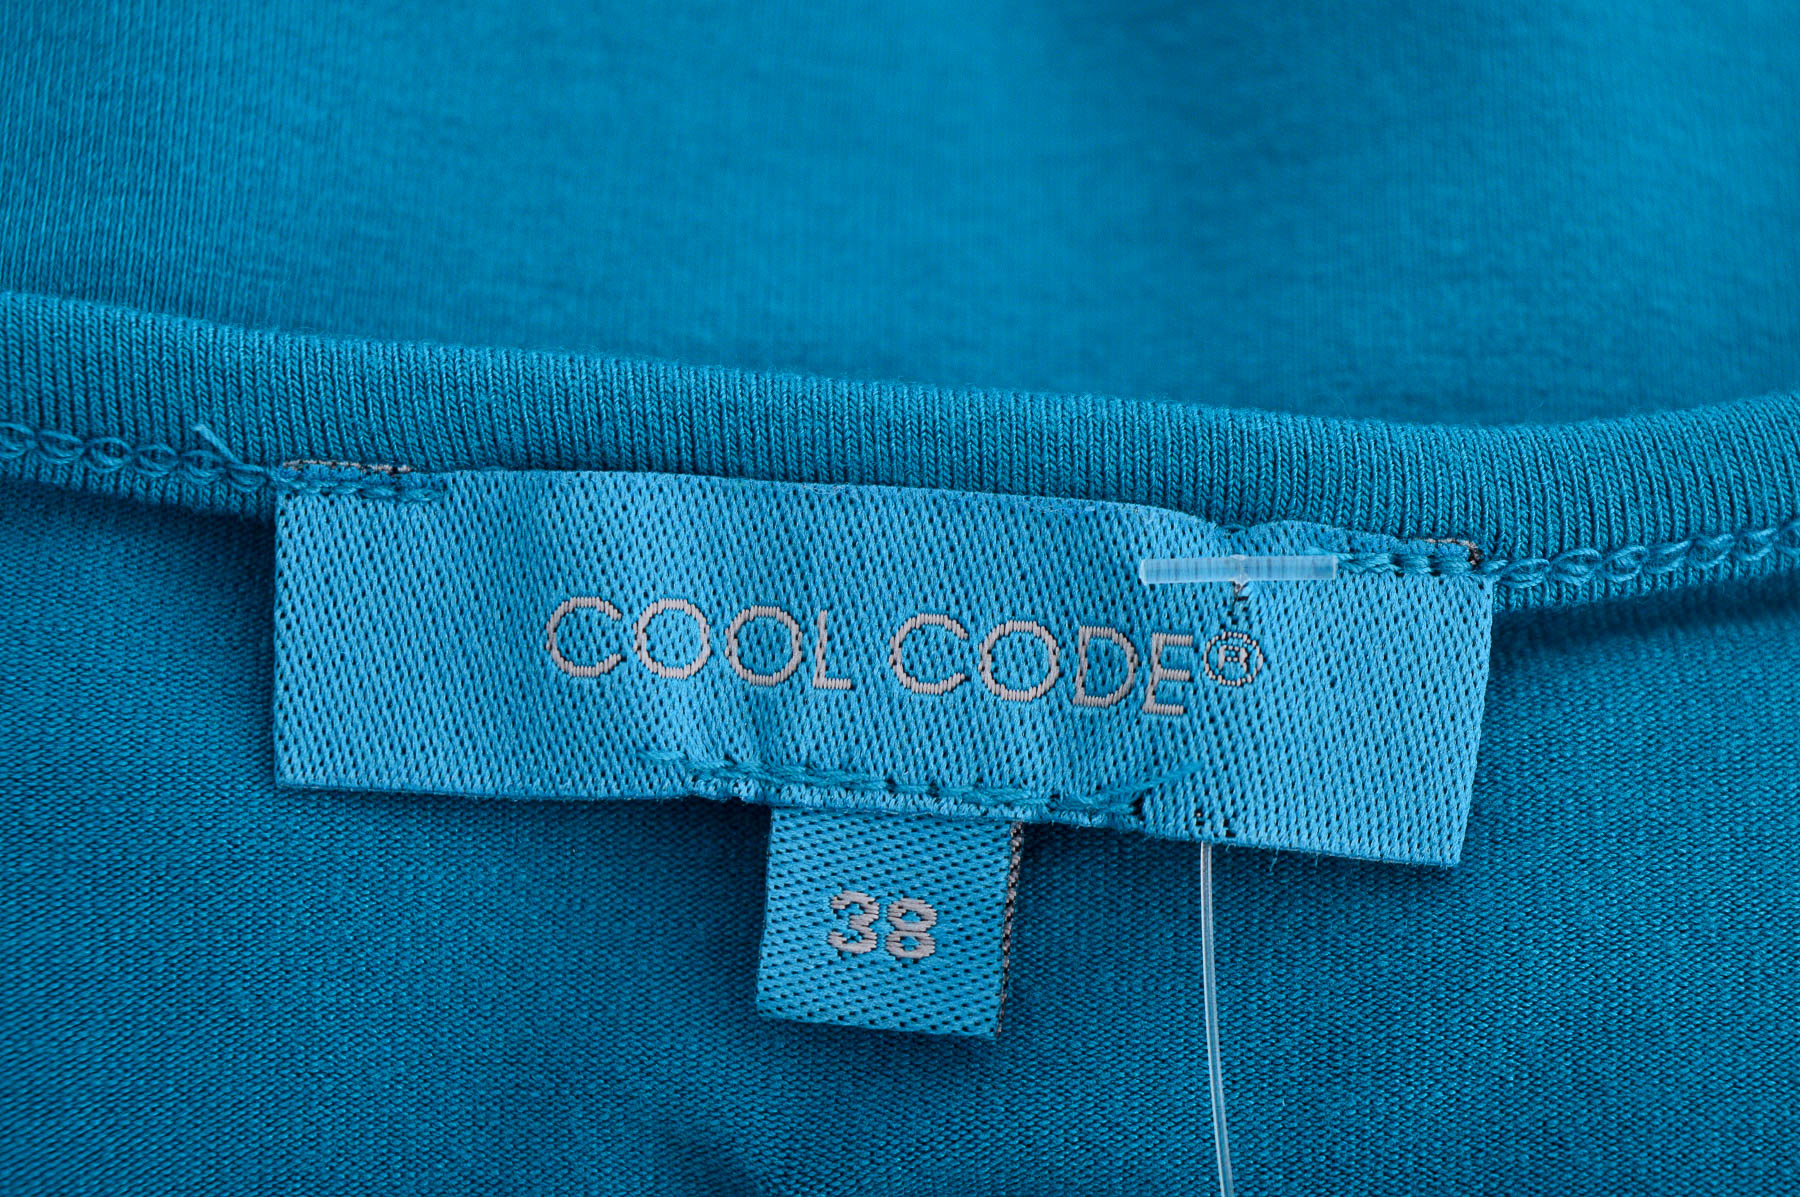 Women's t-shirt - COOL CODE - 2